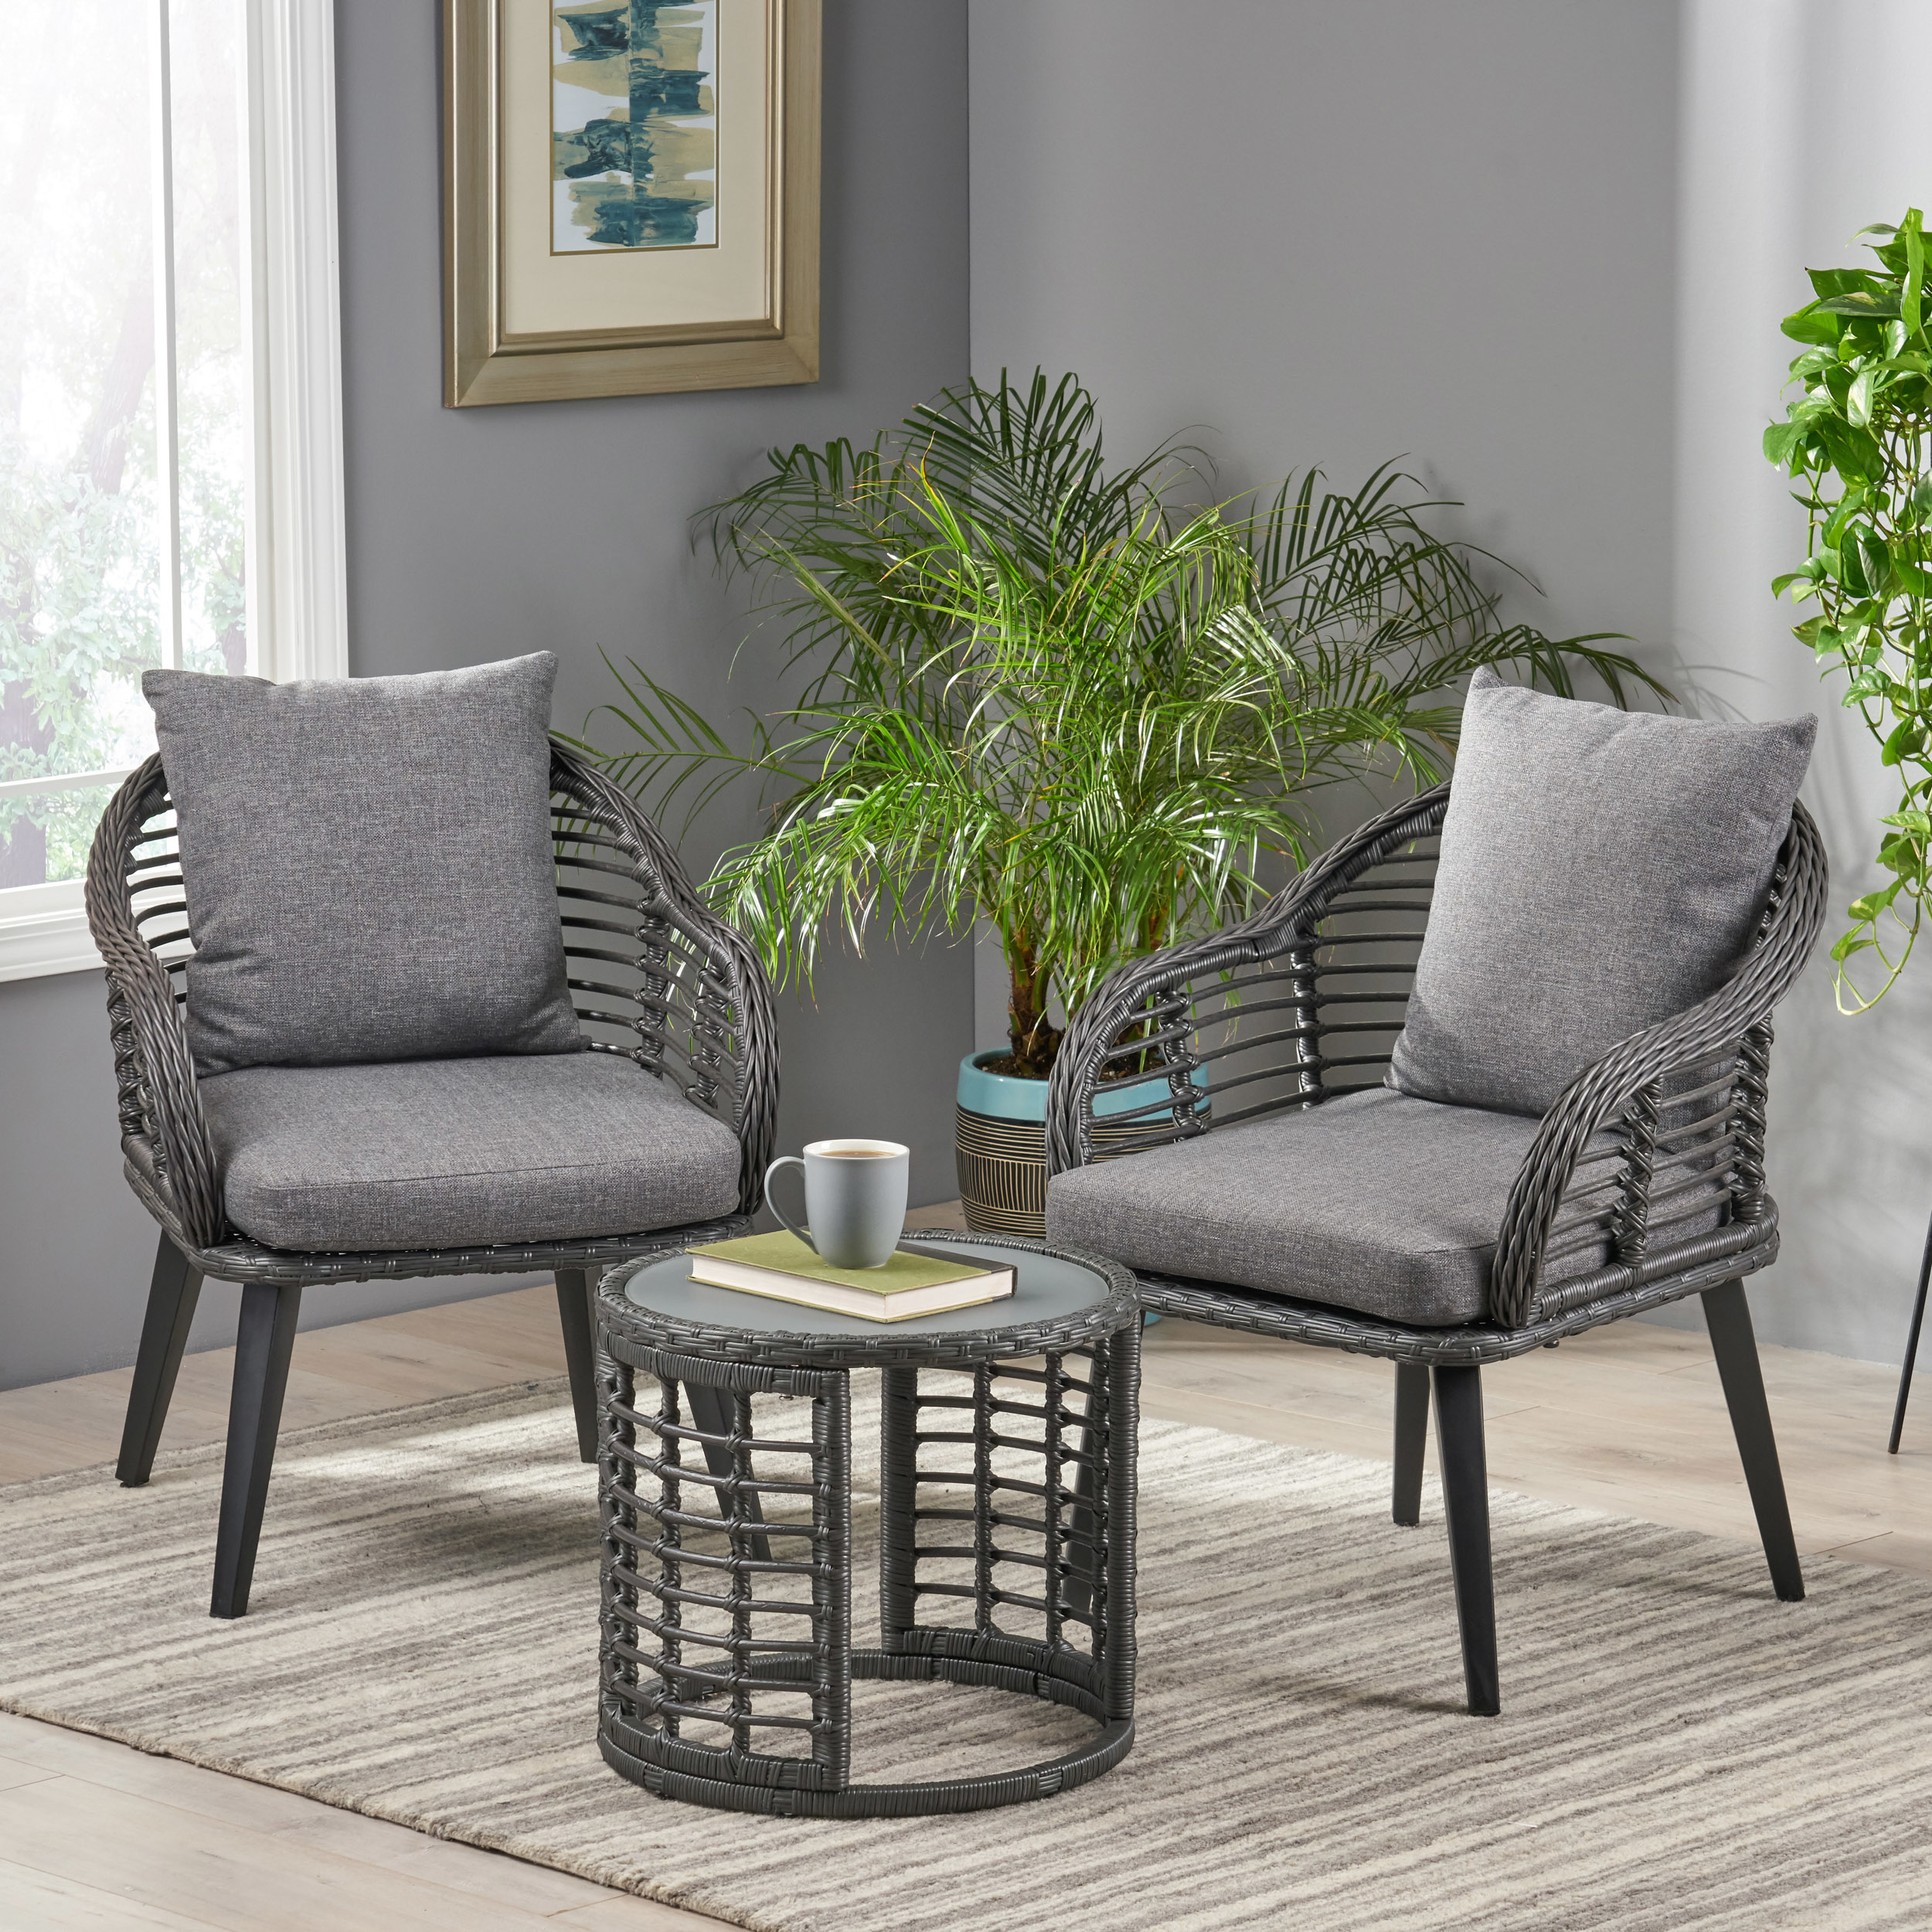 Fern Indoor Modern Boho Wicker Chat Set With Side Table - Gray + Dark Gray + Black